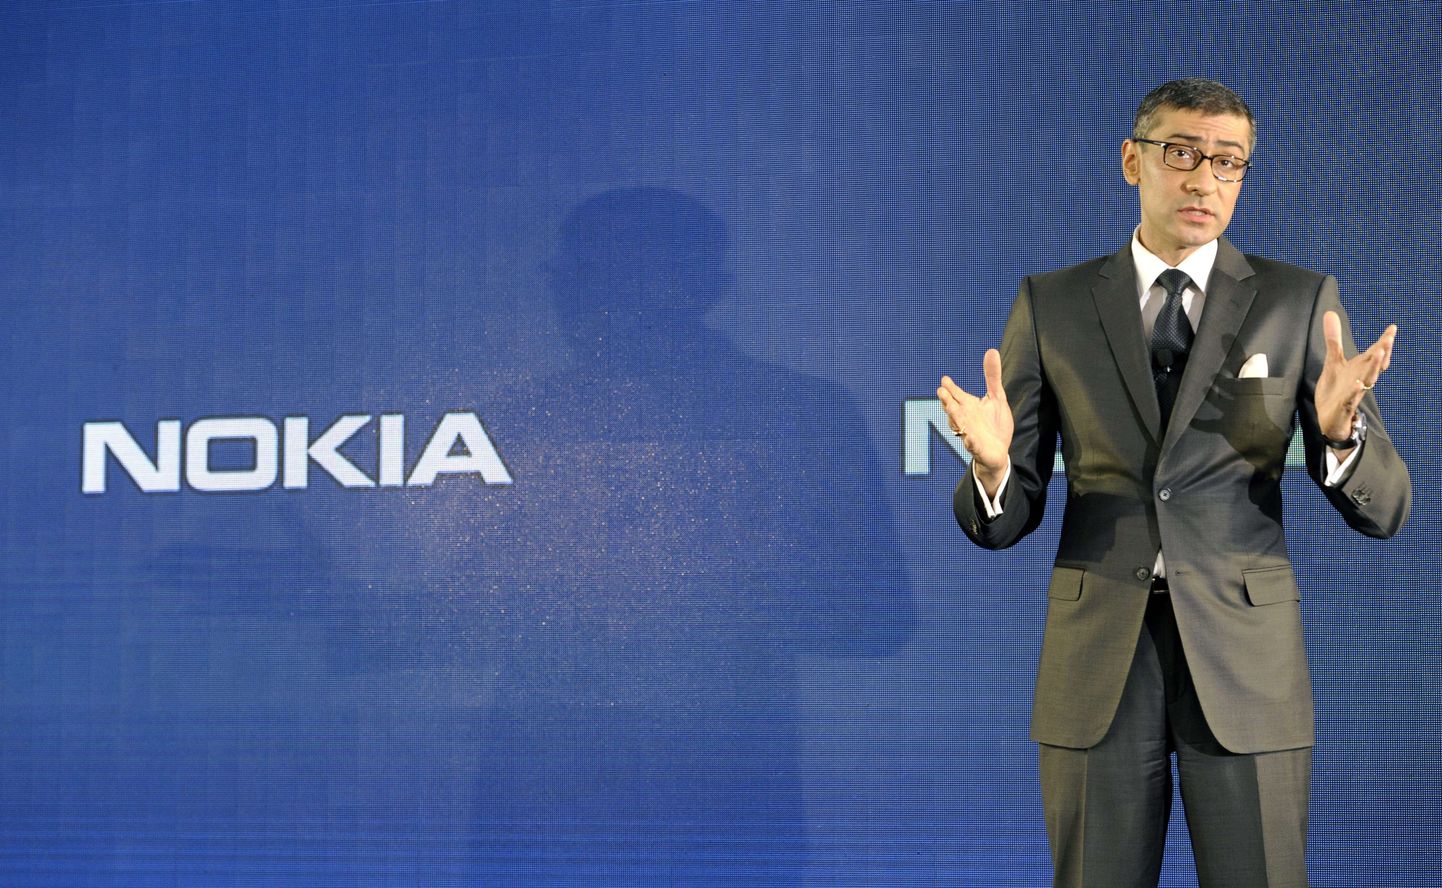 Nokia uus juht Rajeev Suri